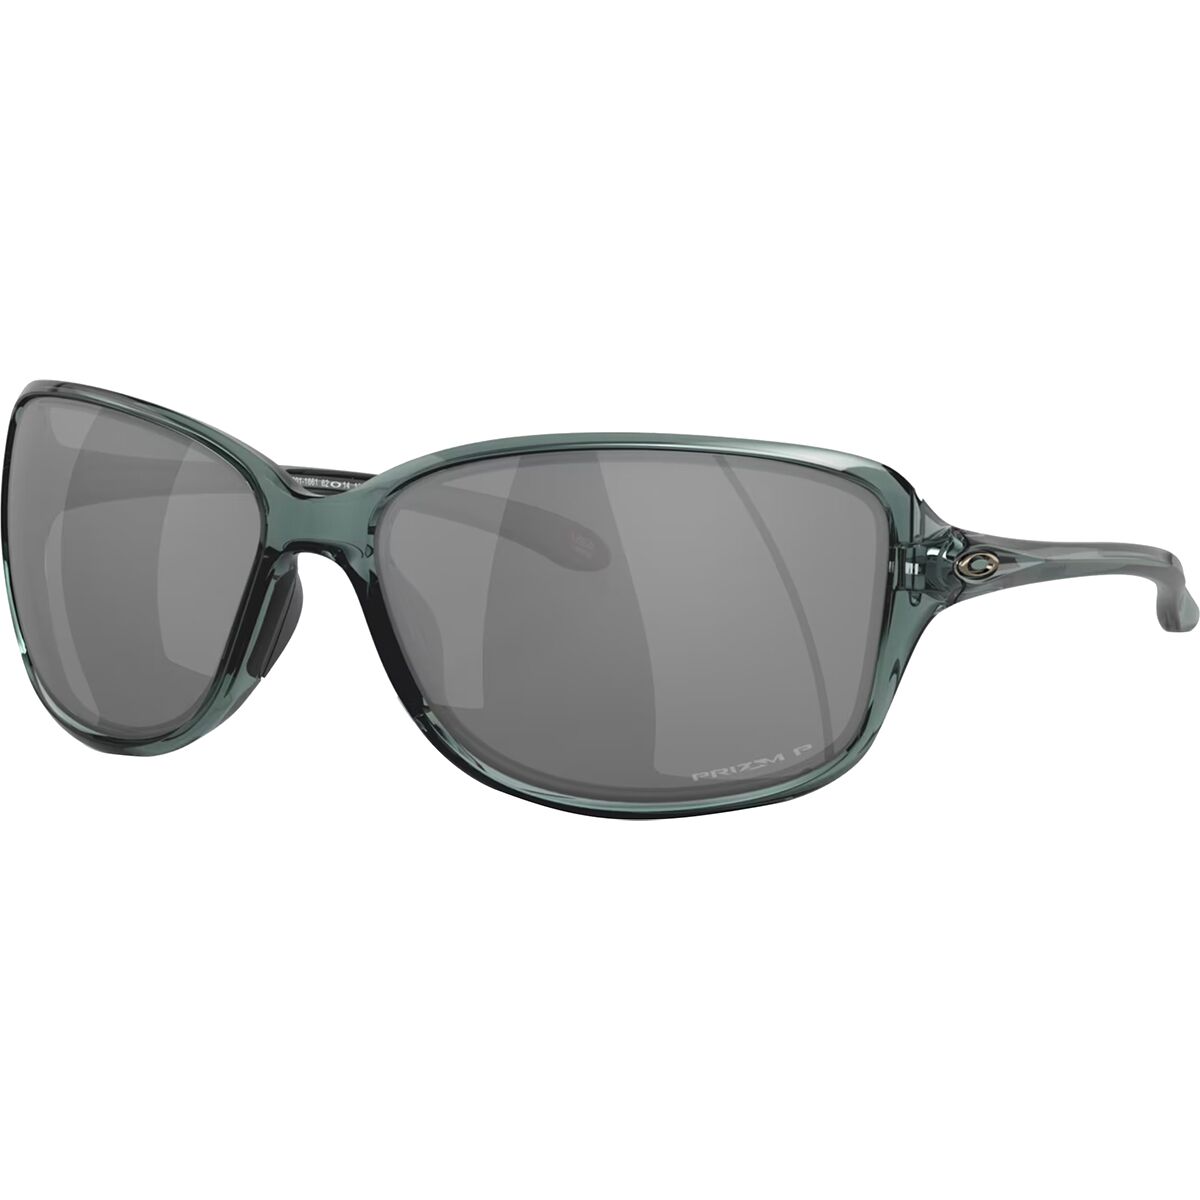 Oakley Cohort Polarized Sunglasses - Women's